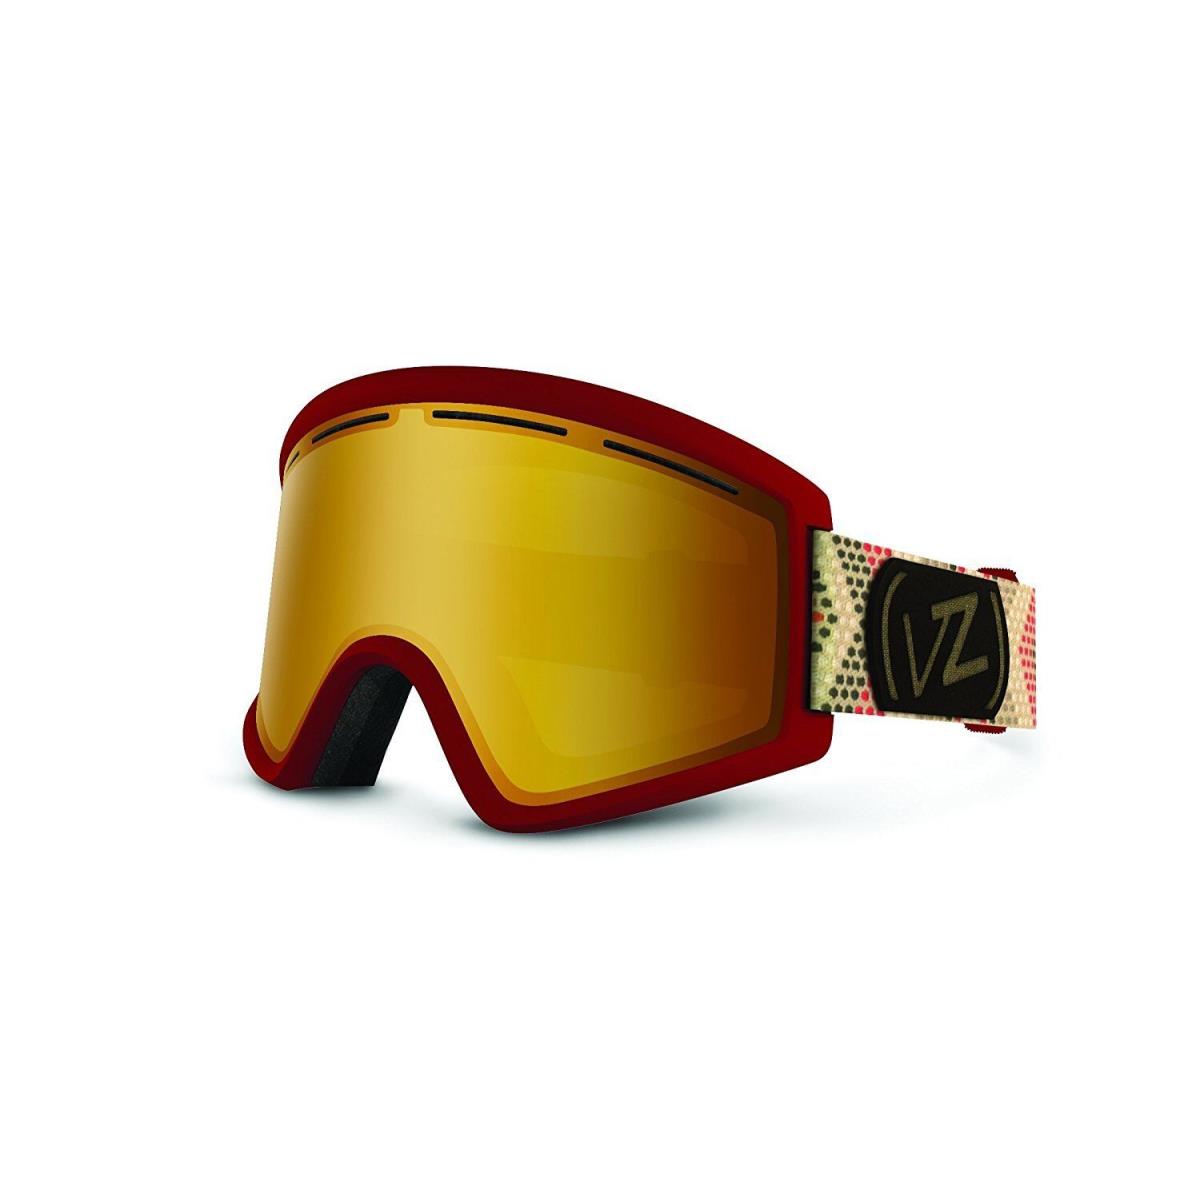 Vonzipper Cleaver Adult Ski / Snowboard Goggles Multiple Colors J.J Red Satin/Copper Chrome